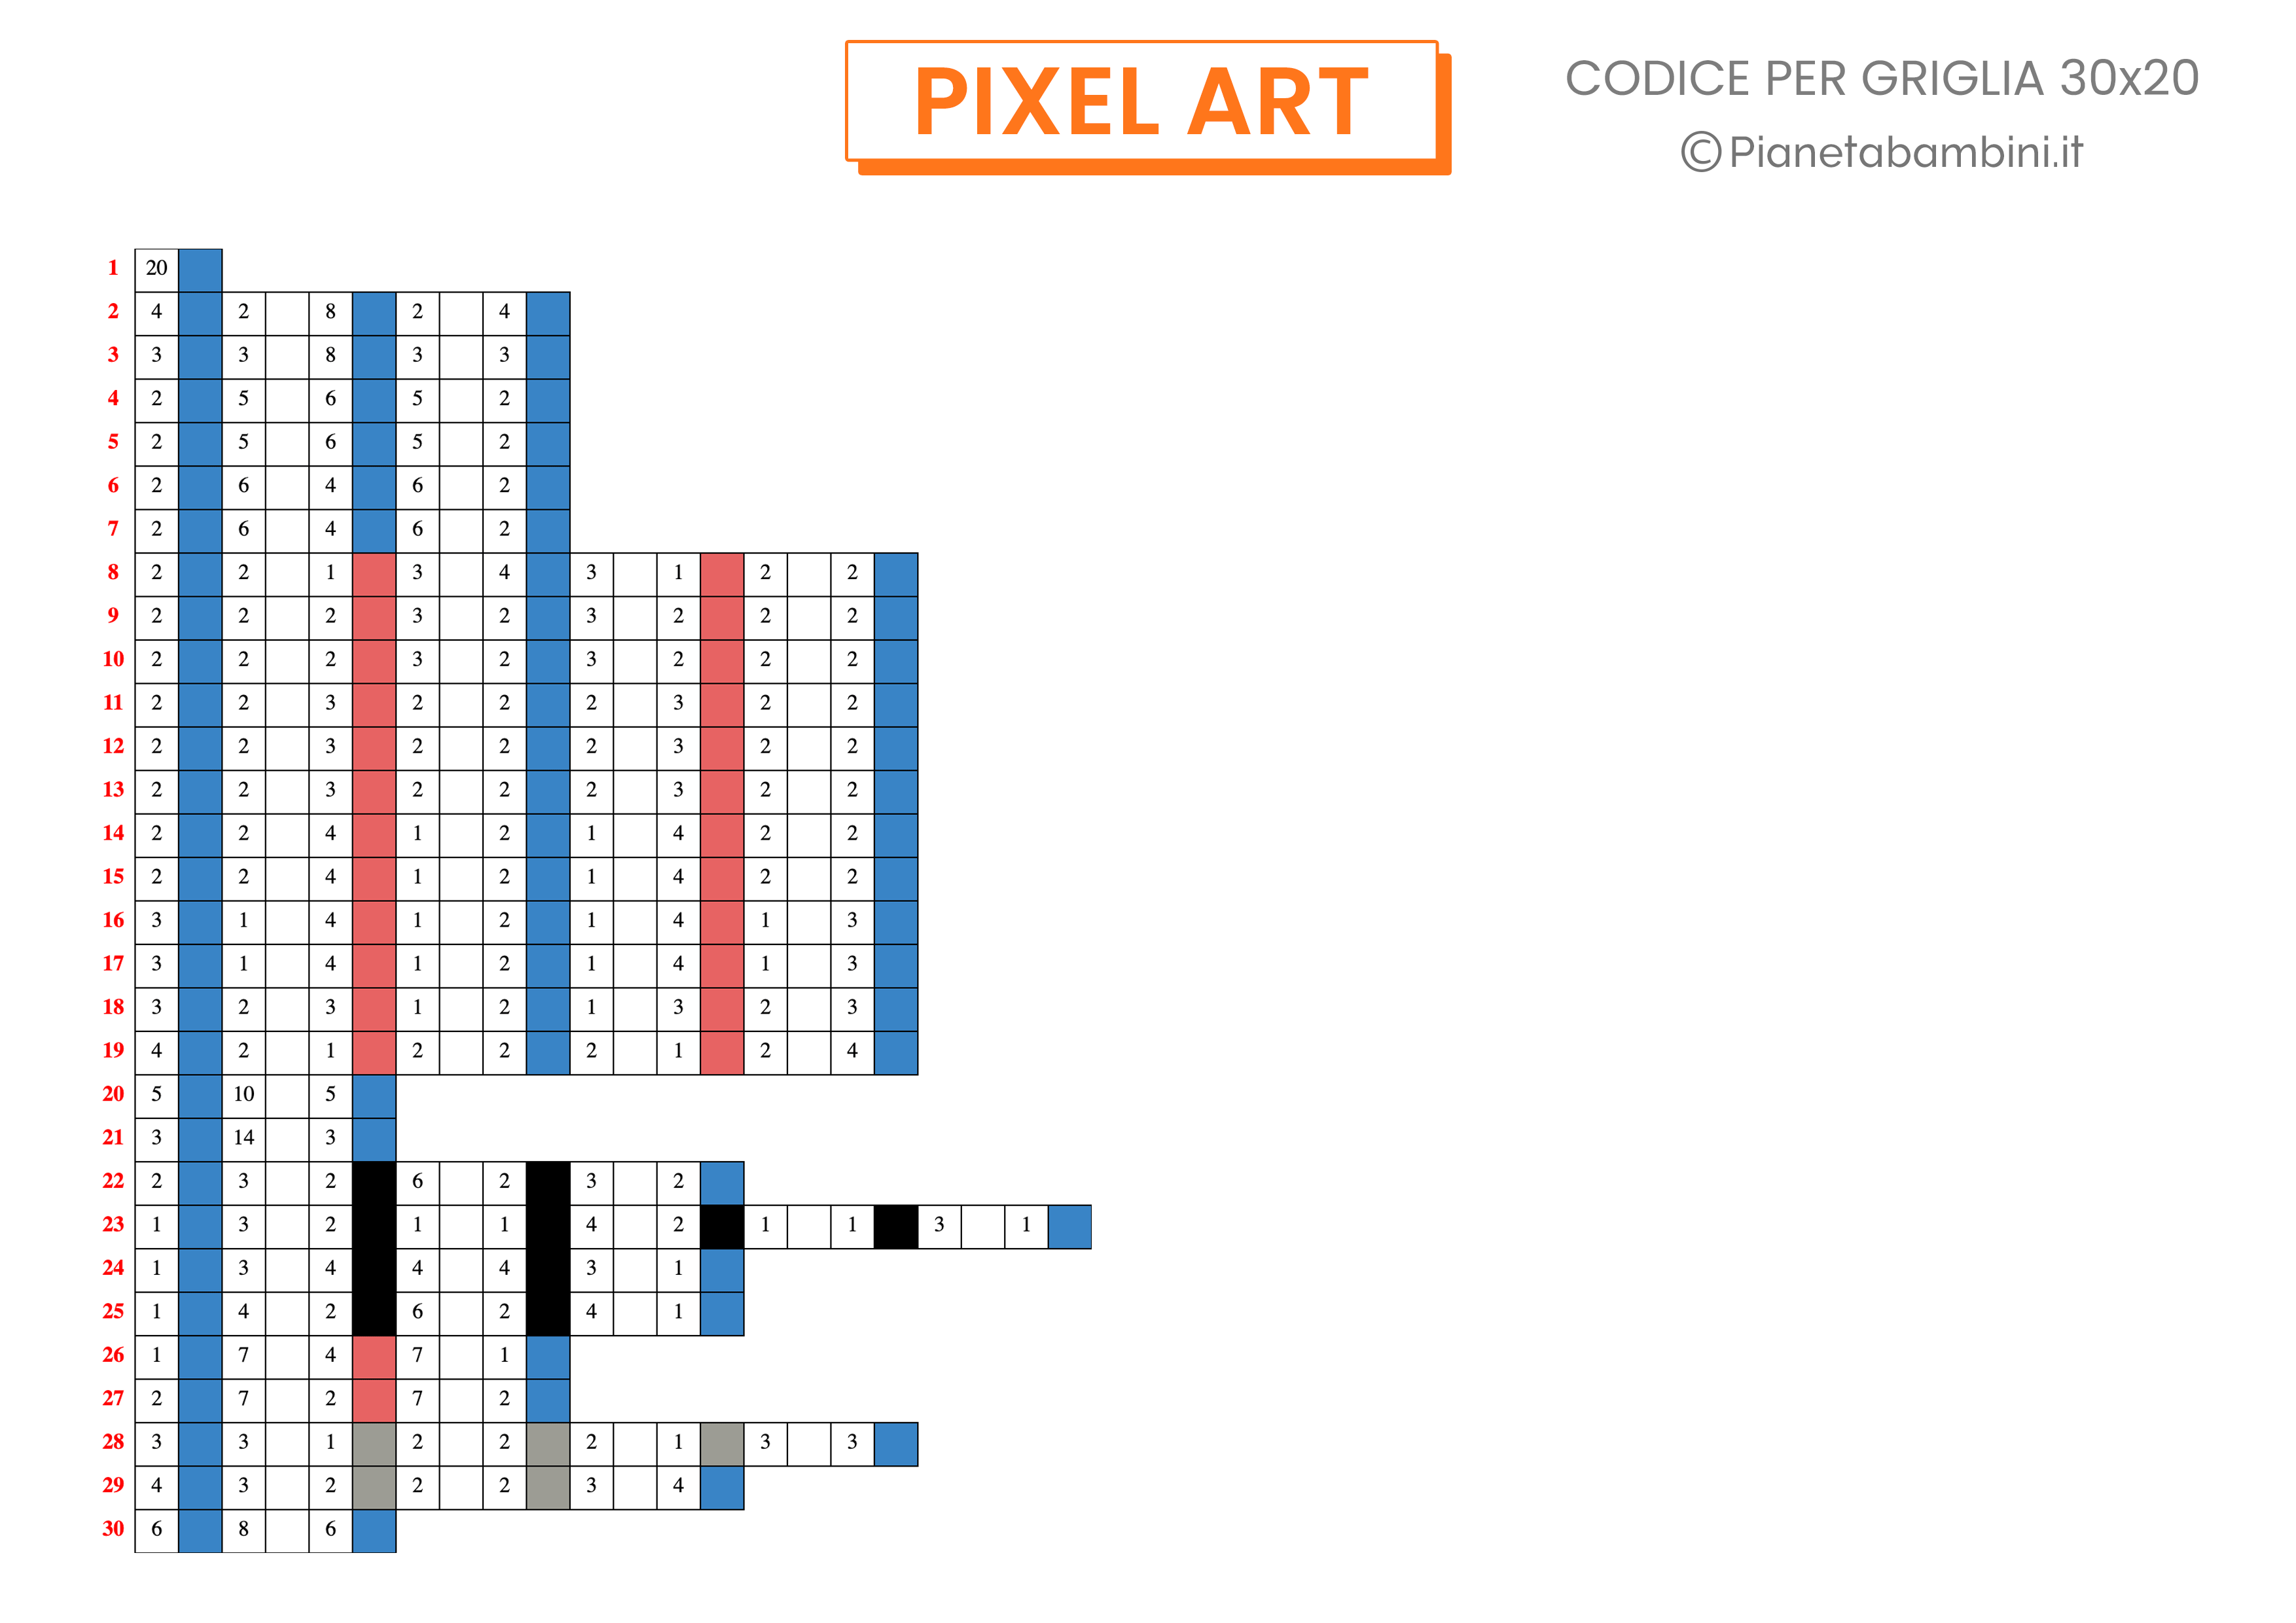 Pixel Art Pasqua Codice Difficile 02